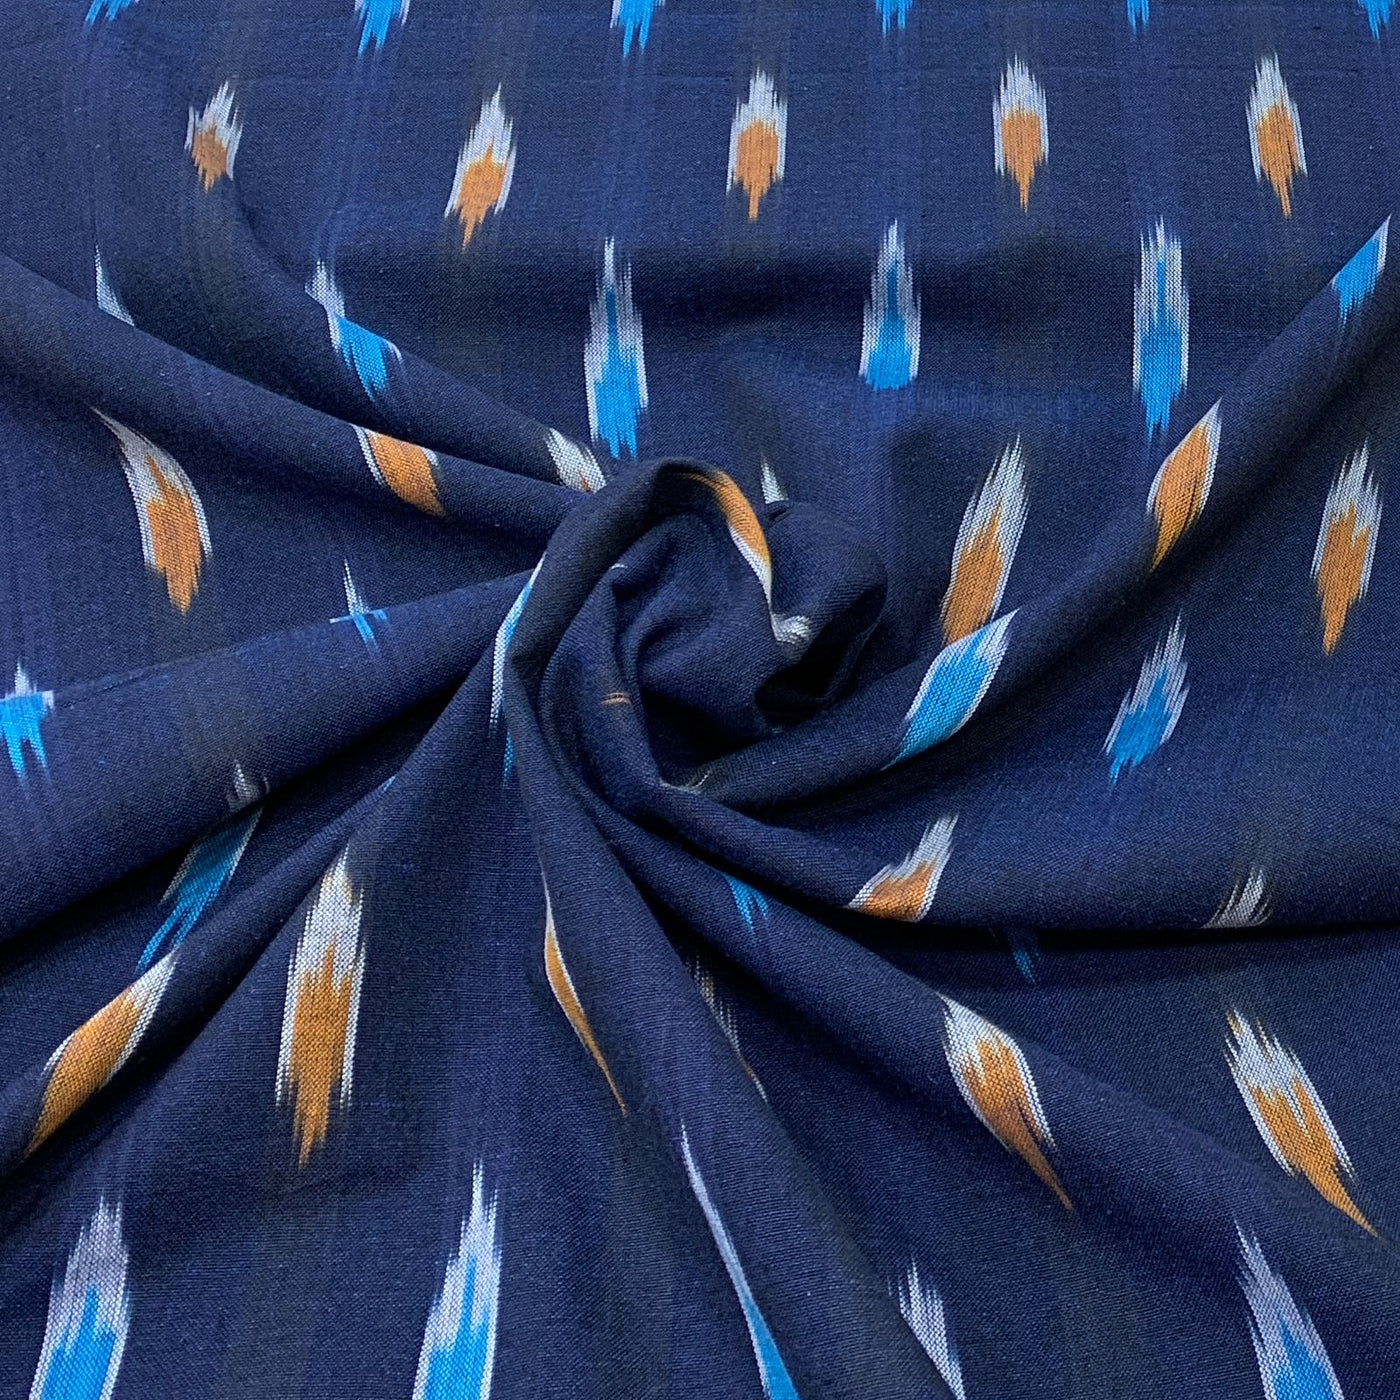 Blue Ikkat Design Cotton Printed Fabric